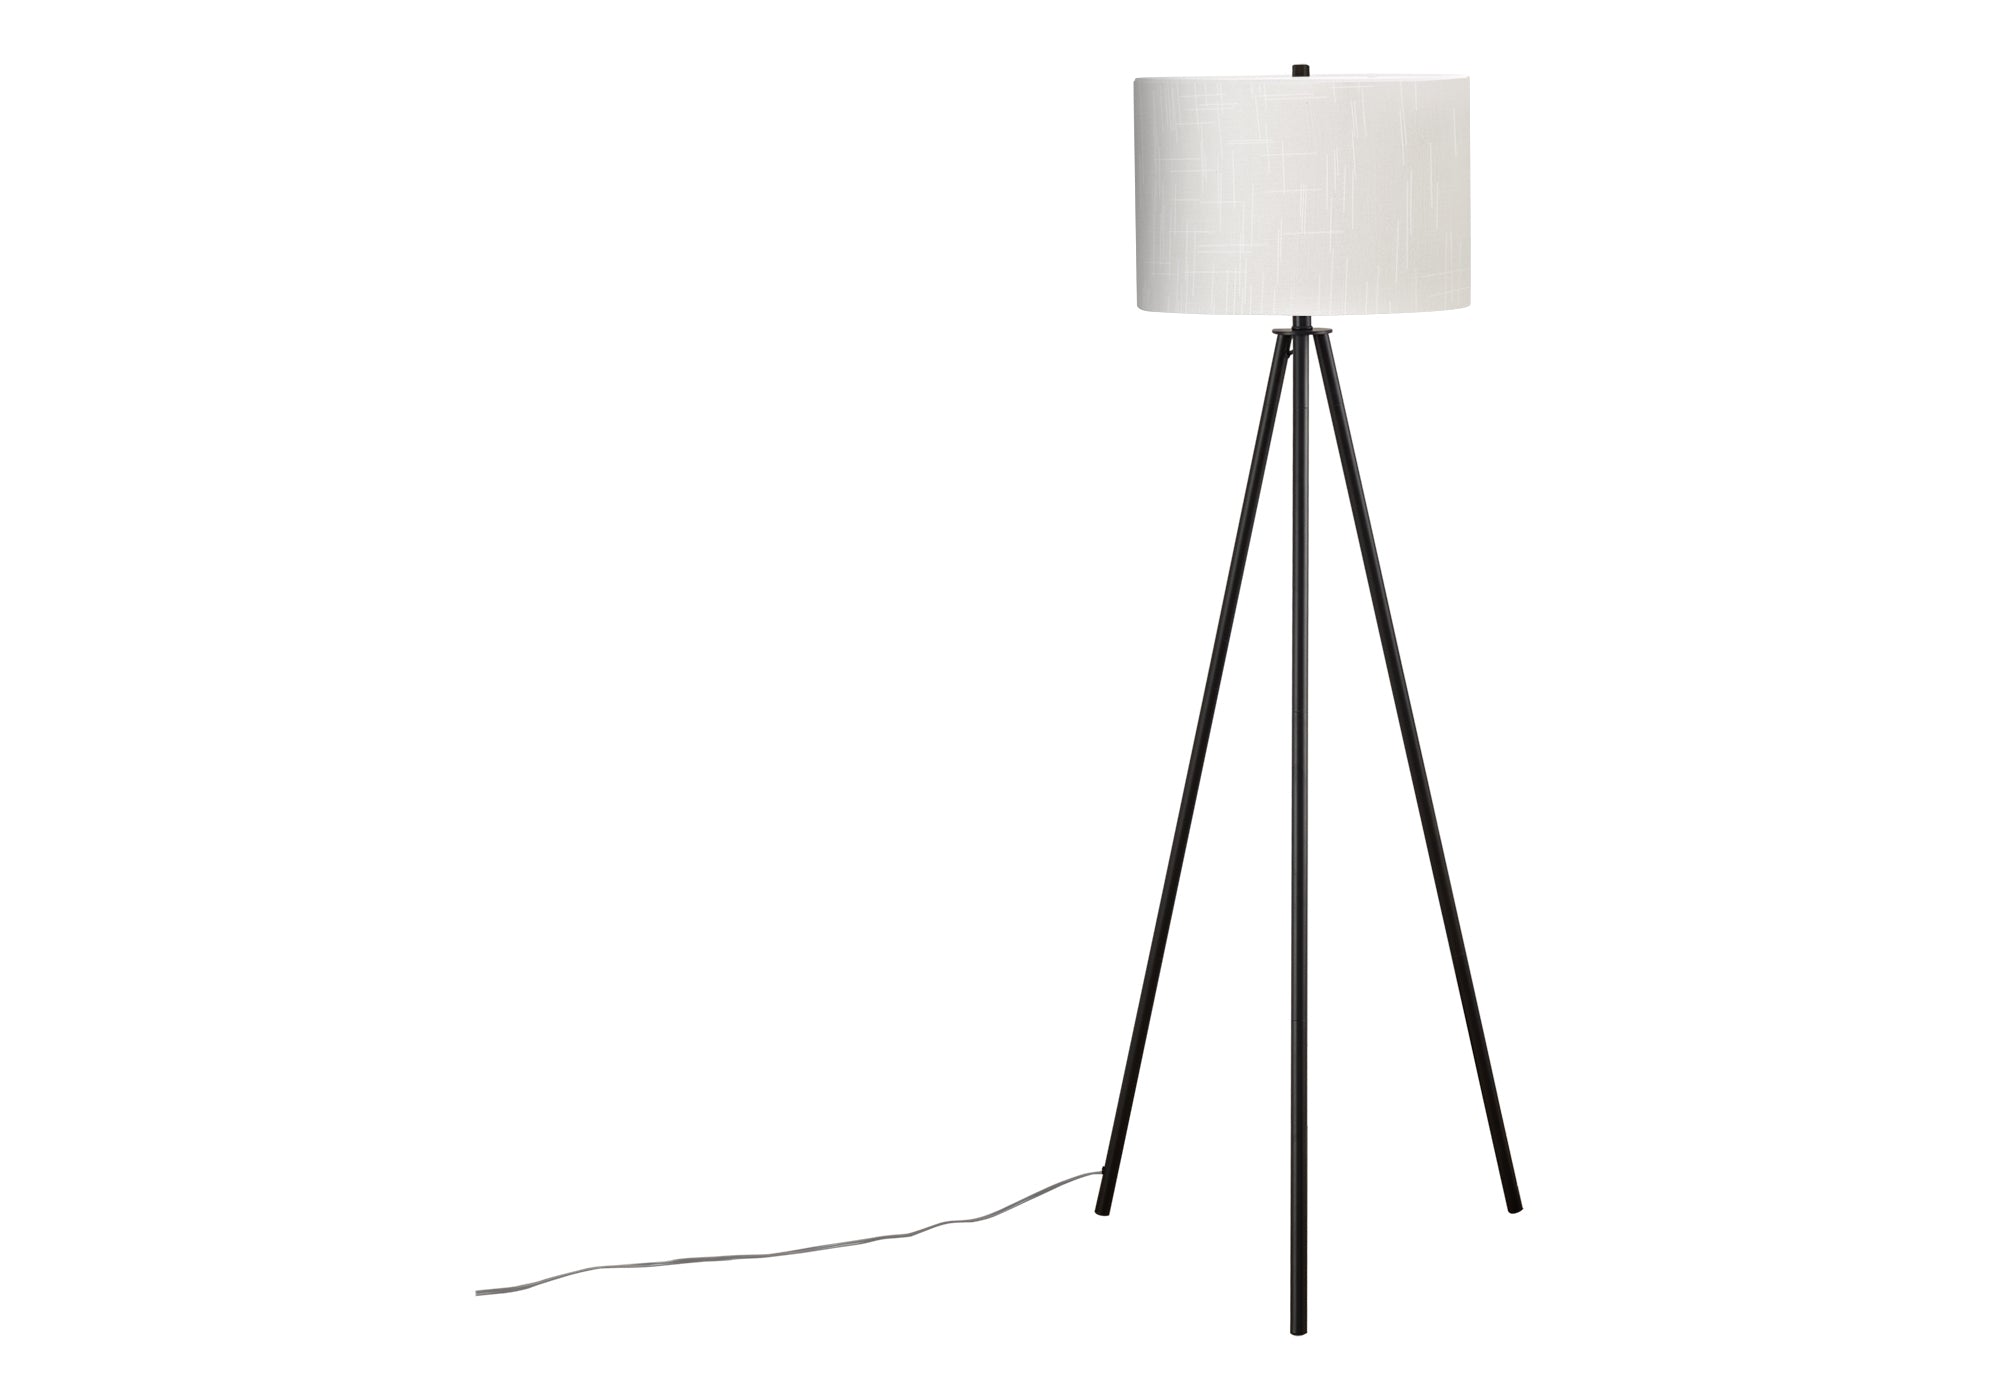 MN-699735    Lighting, 63"H, Floor Lamp, Black Metal, Ivory / Cream Shade, Contemporary